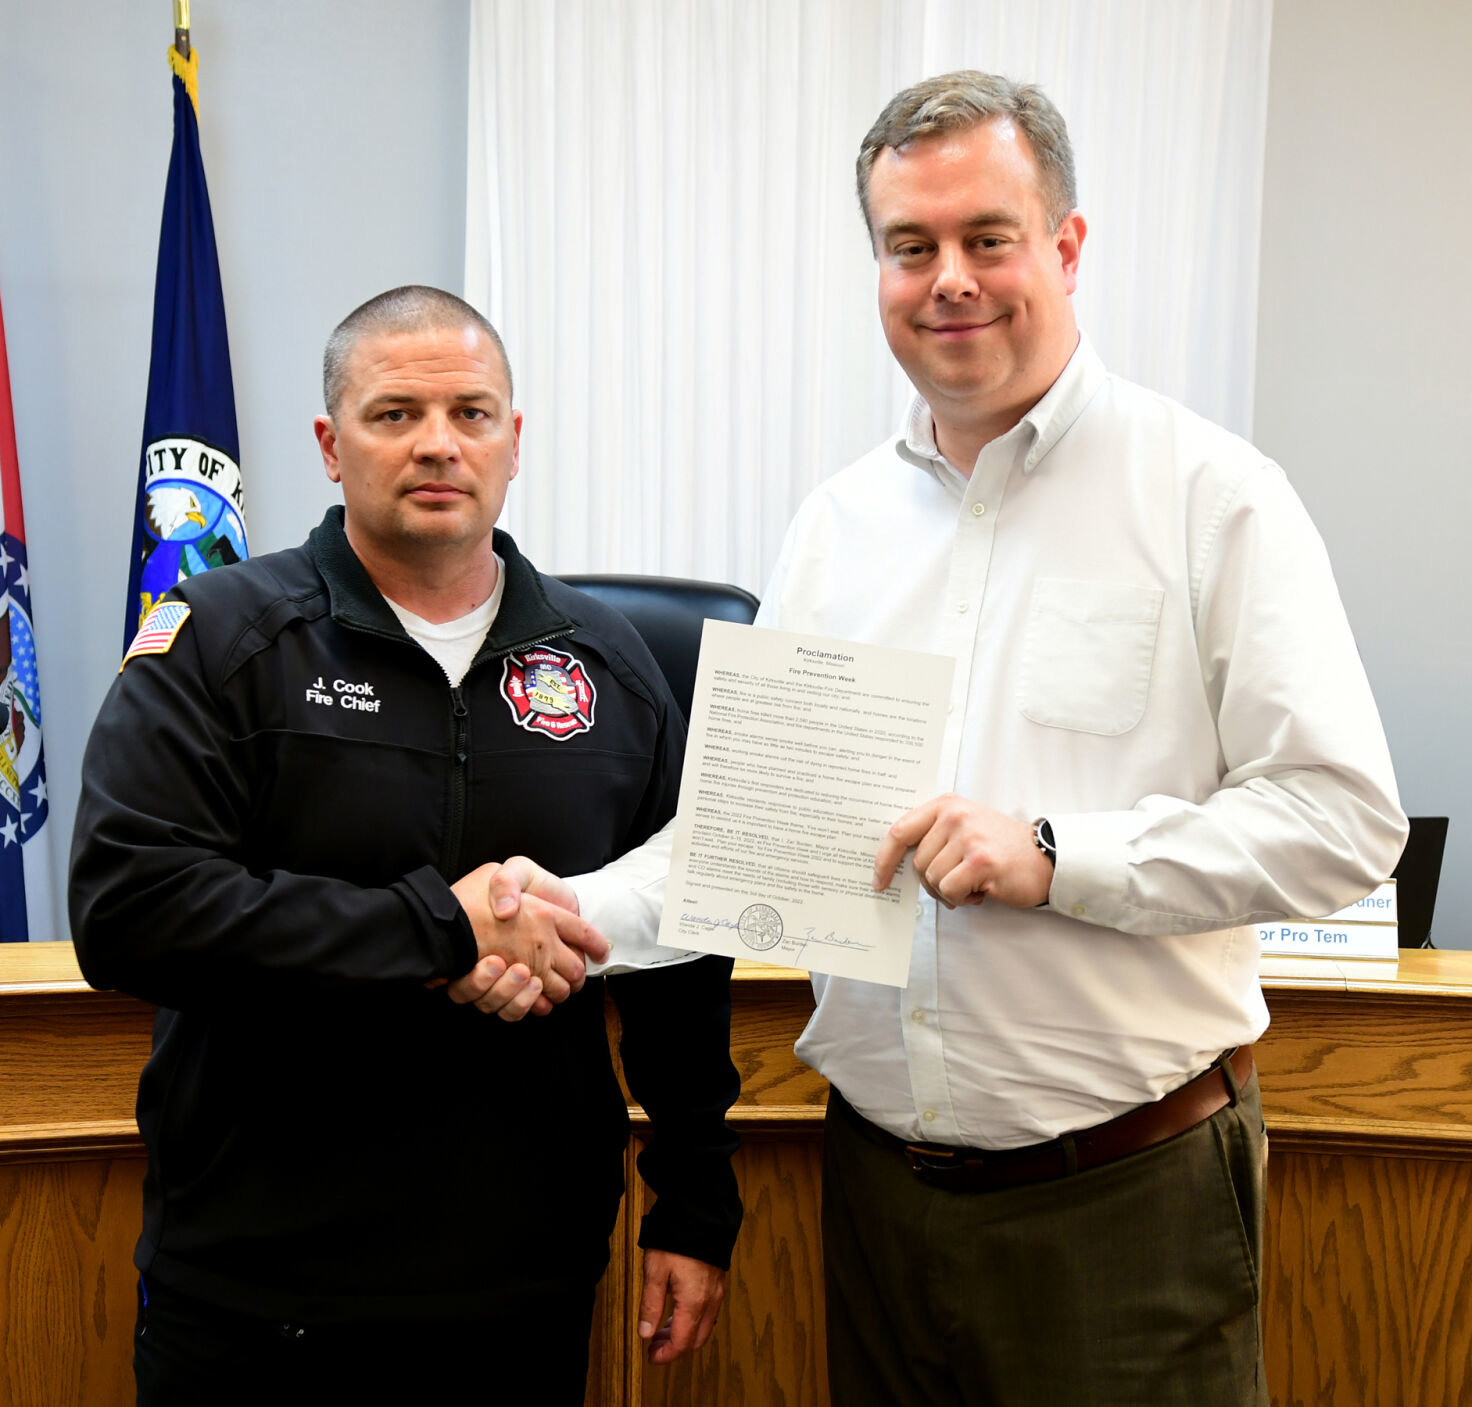 Kirksville Fire Chief Jon Cook (left) receives a proclamation from Mayor Zac Burden.